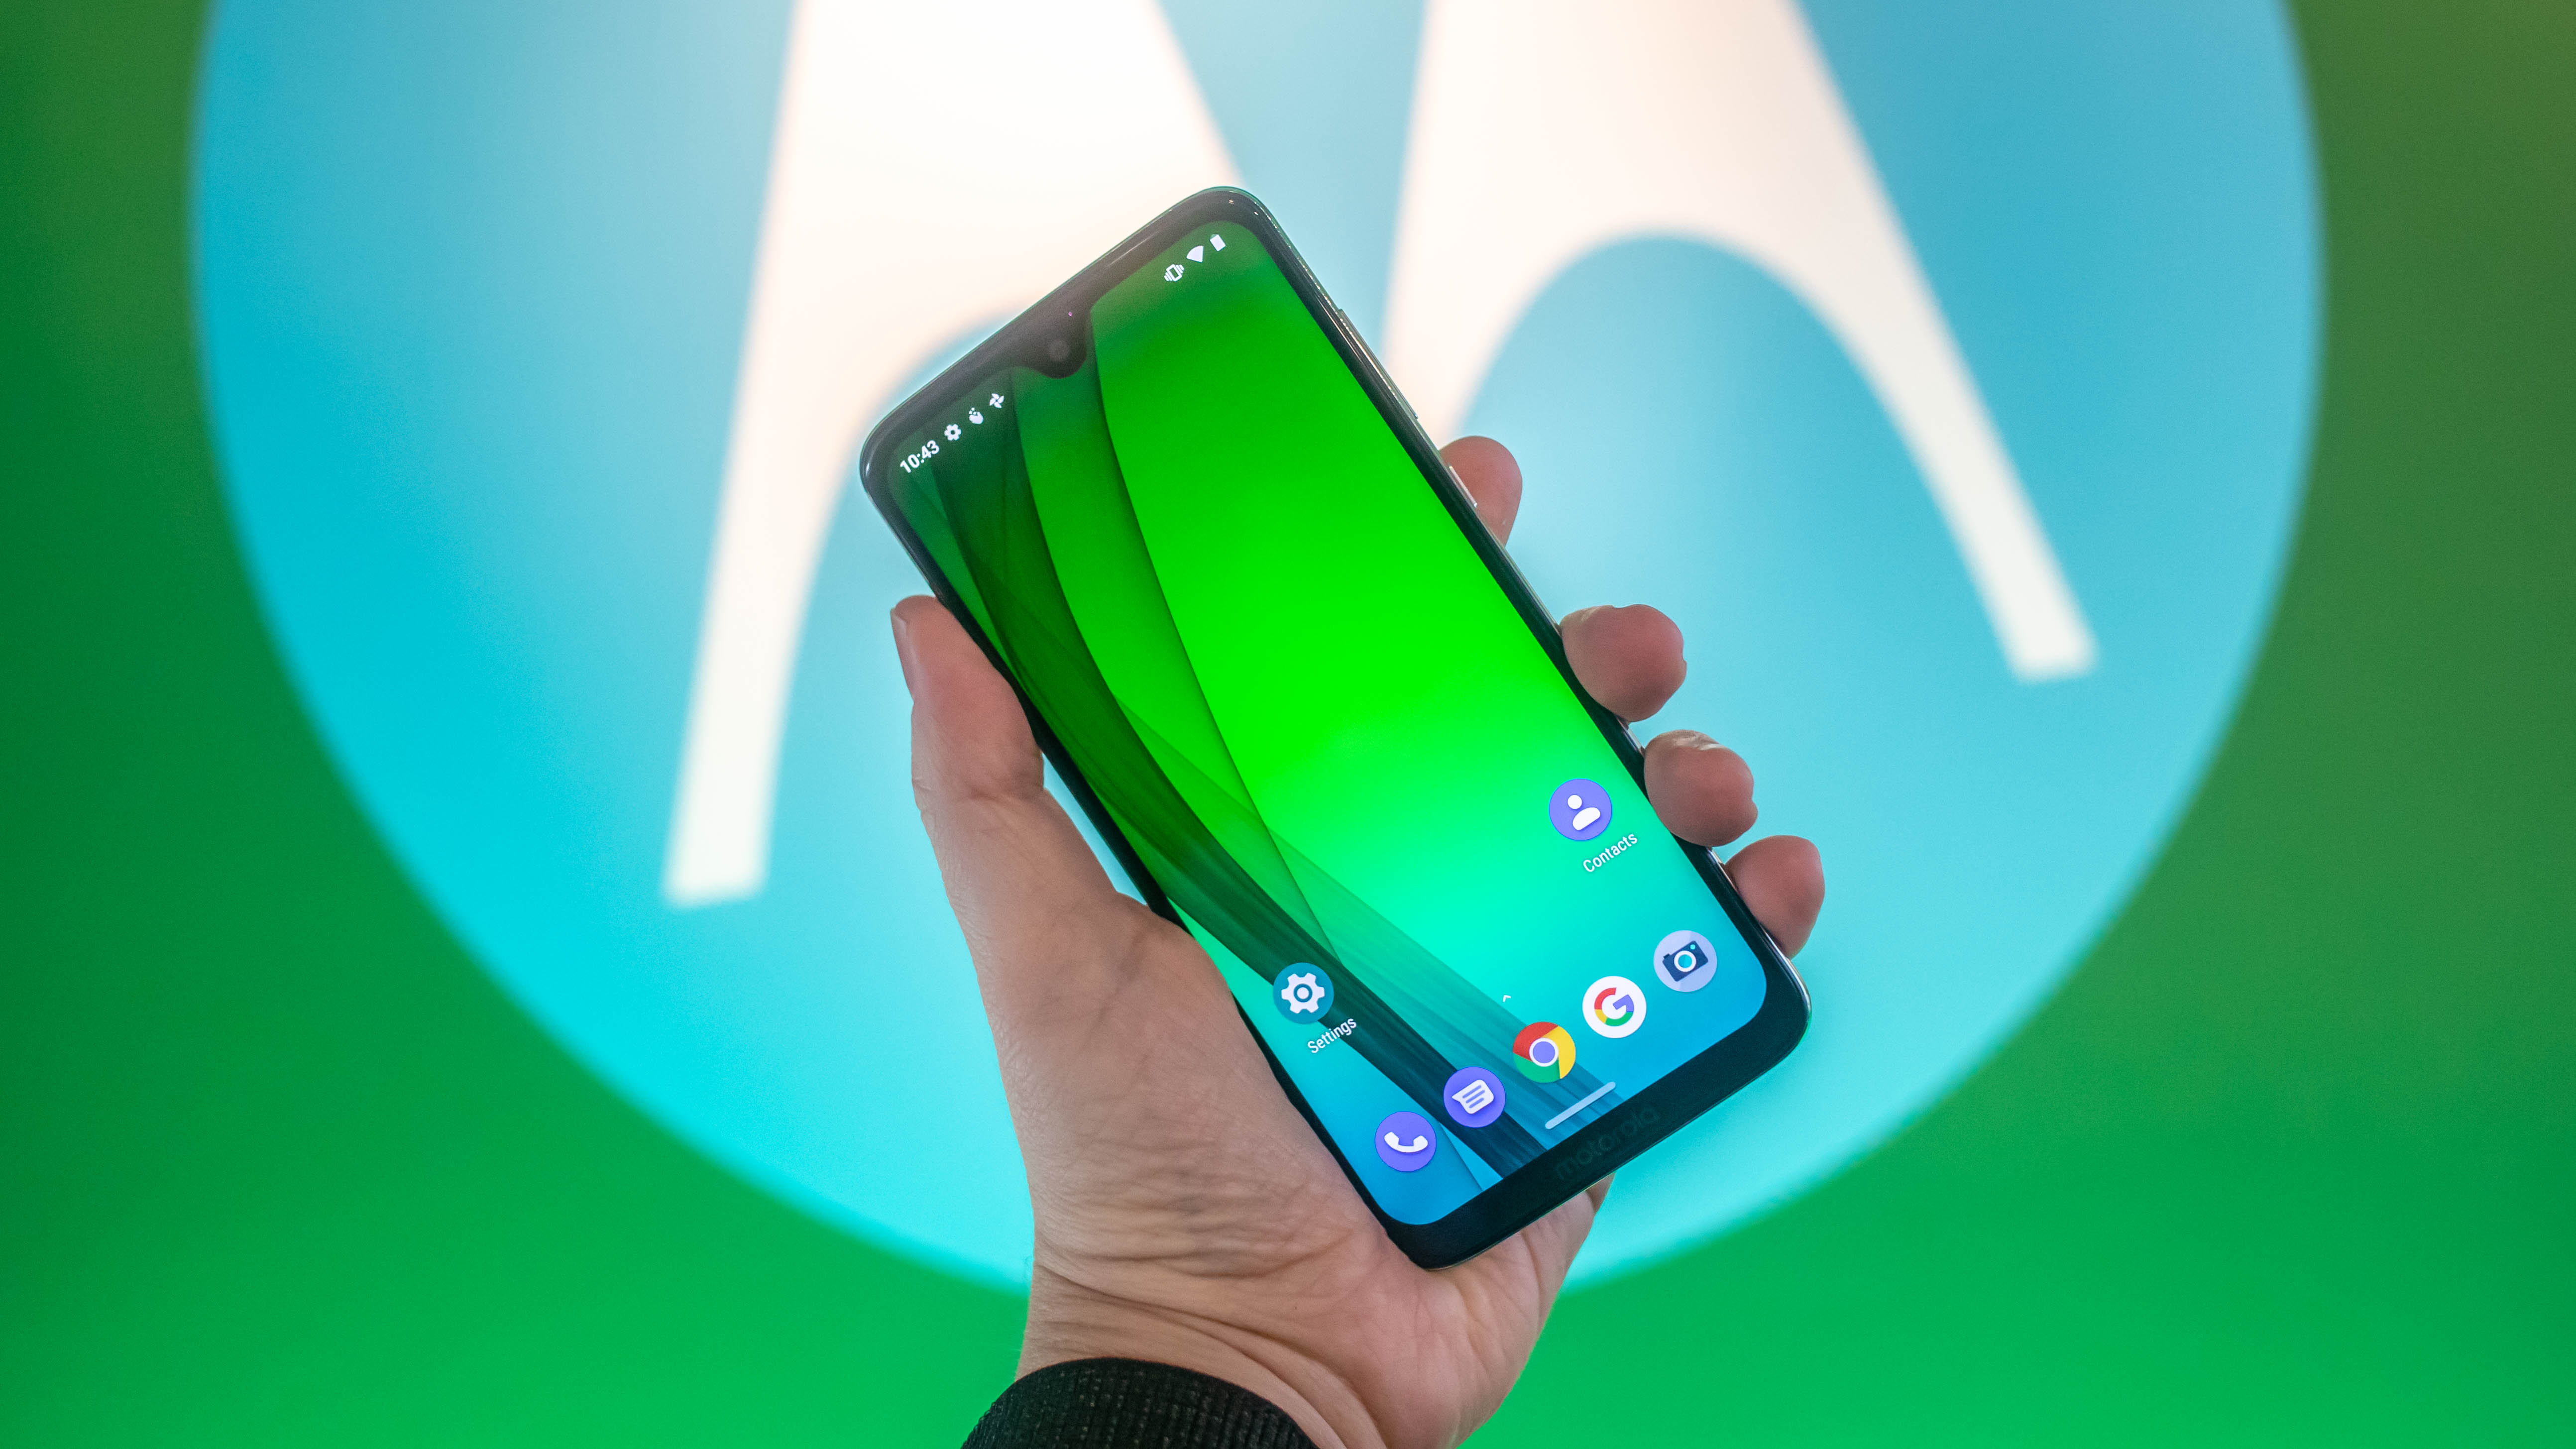 The best Motorola phones of 2019: find the best Moto smartphone for you